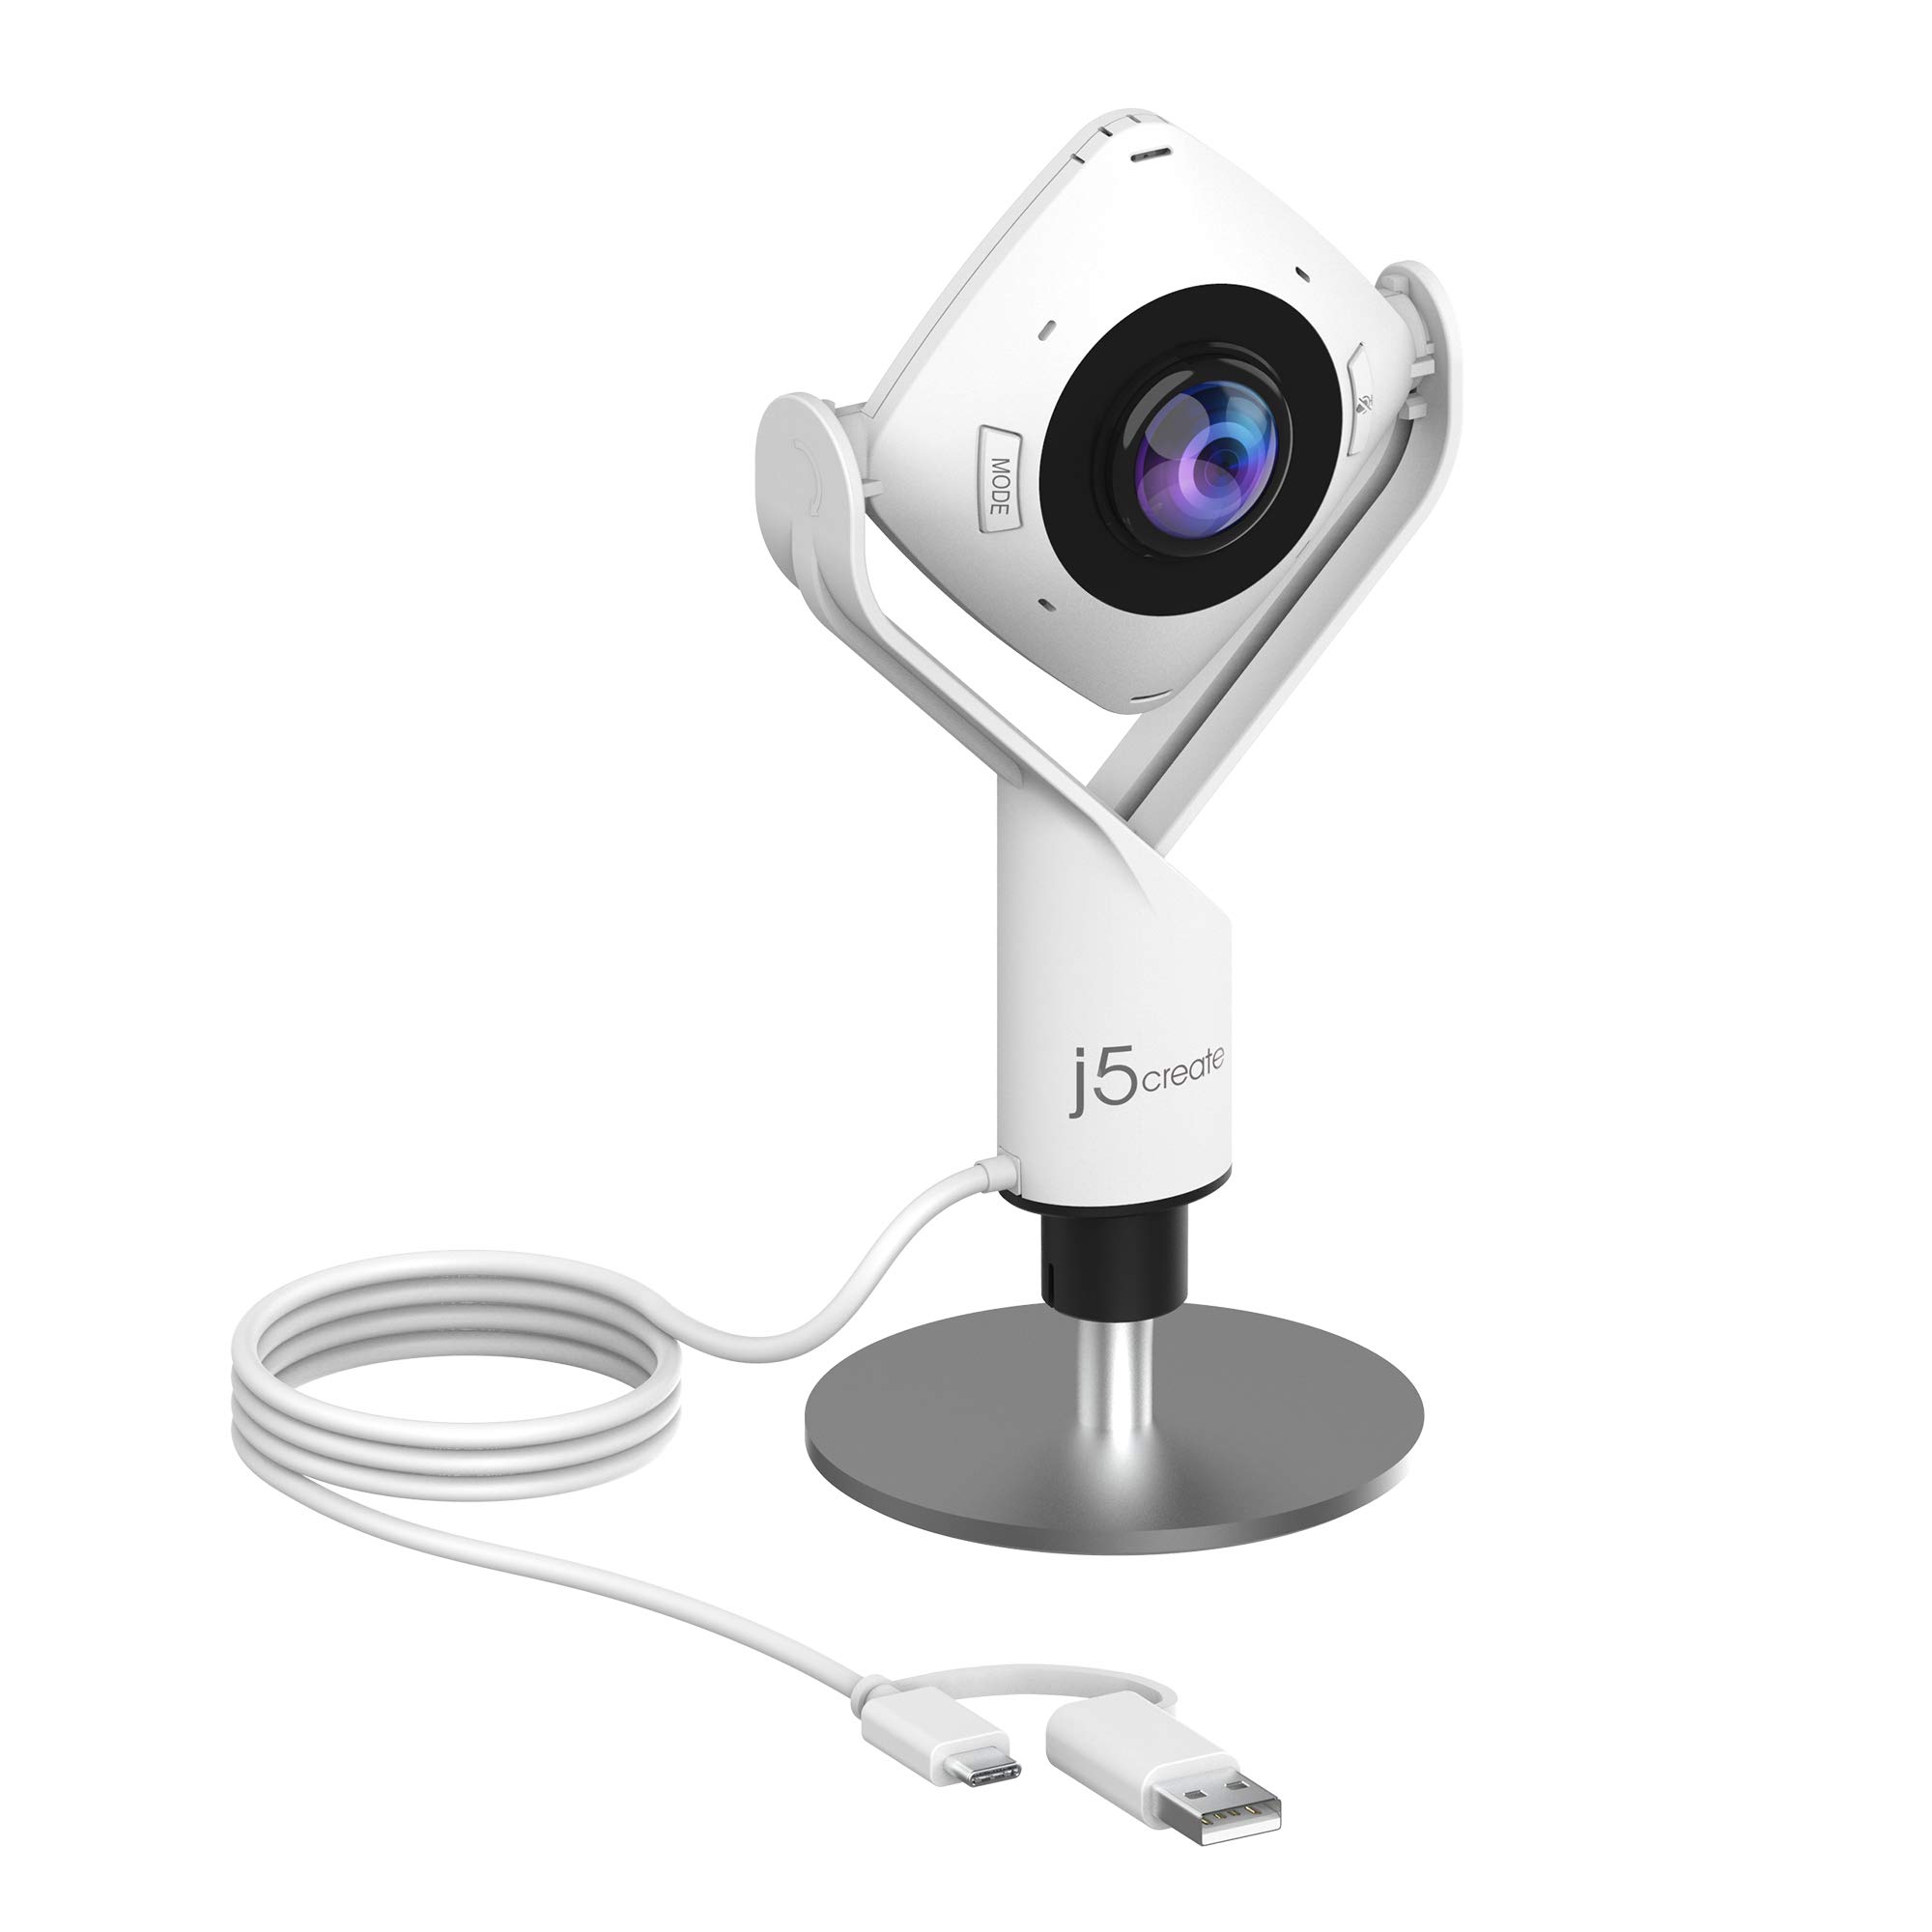 j5create 360 度全周囲会議 Web カメラ - 高忠実度マイク付き 1080P HD ビデオ会議カメラ、USB-C |ビデオ会議、オンライン授業、コラボレーション用 (JVCU360)